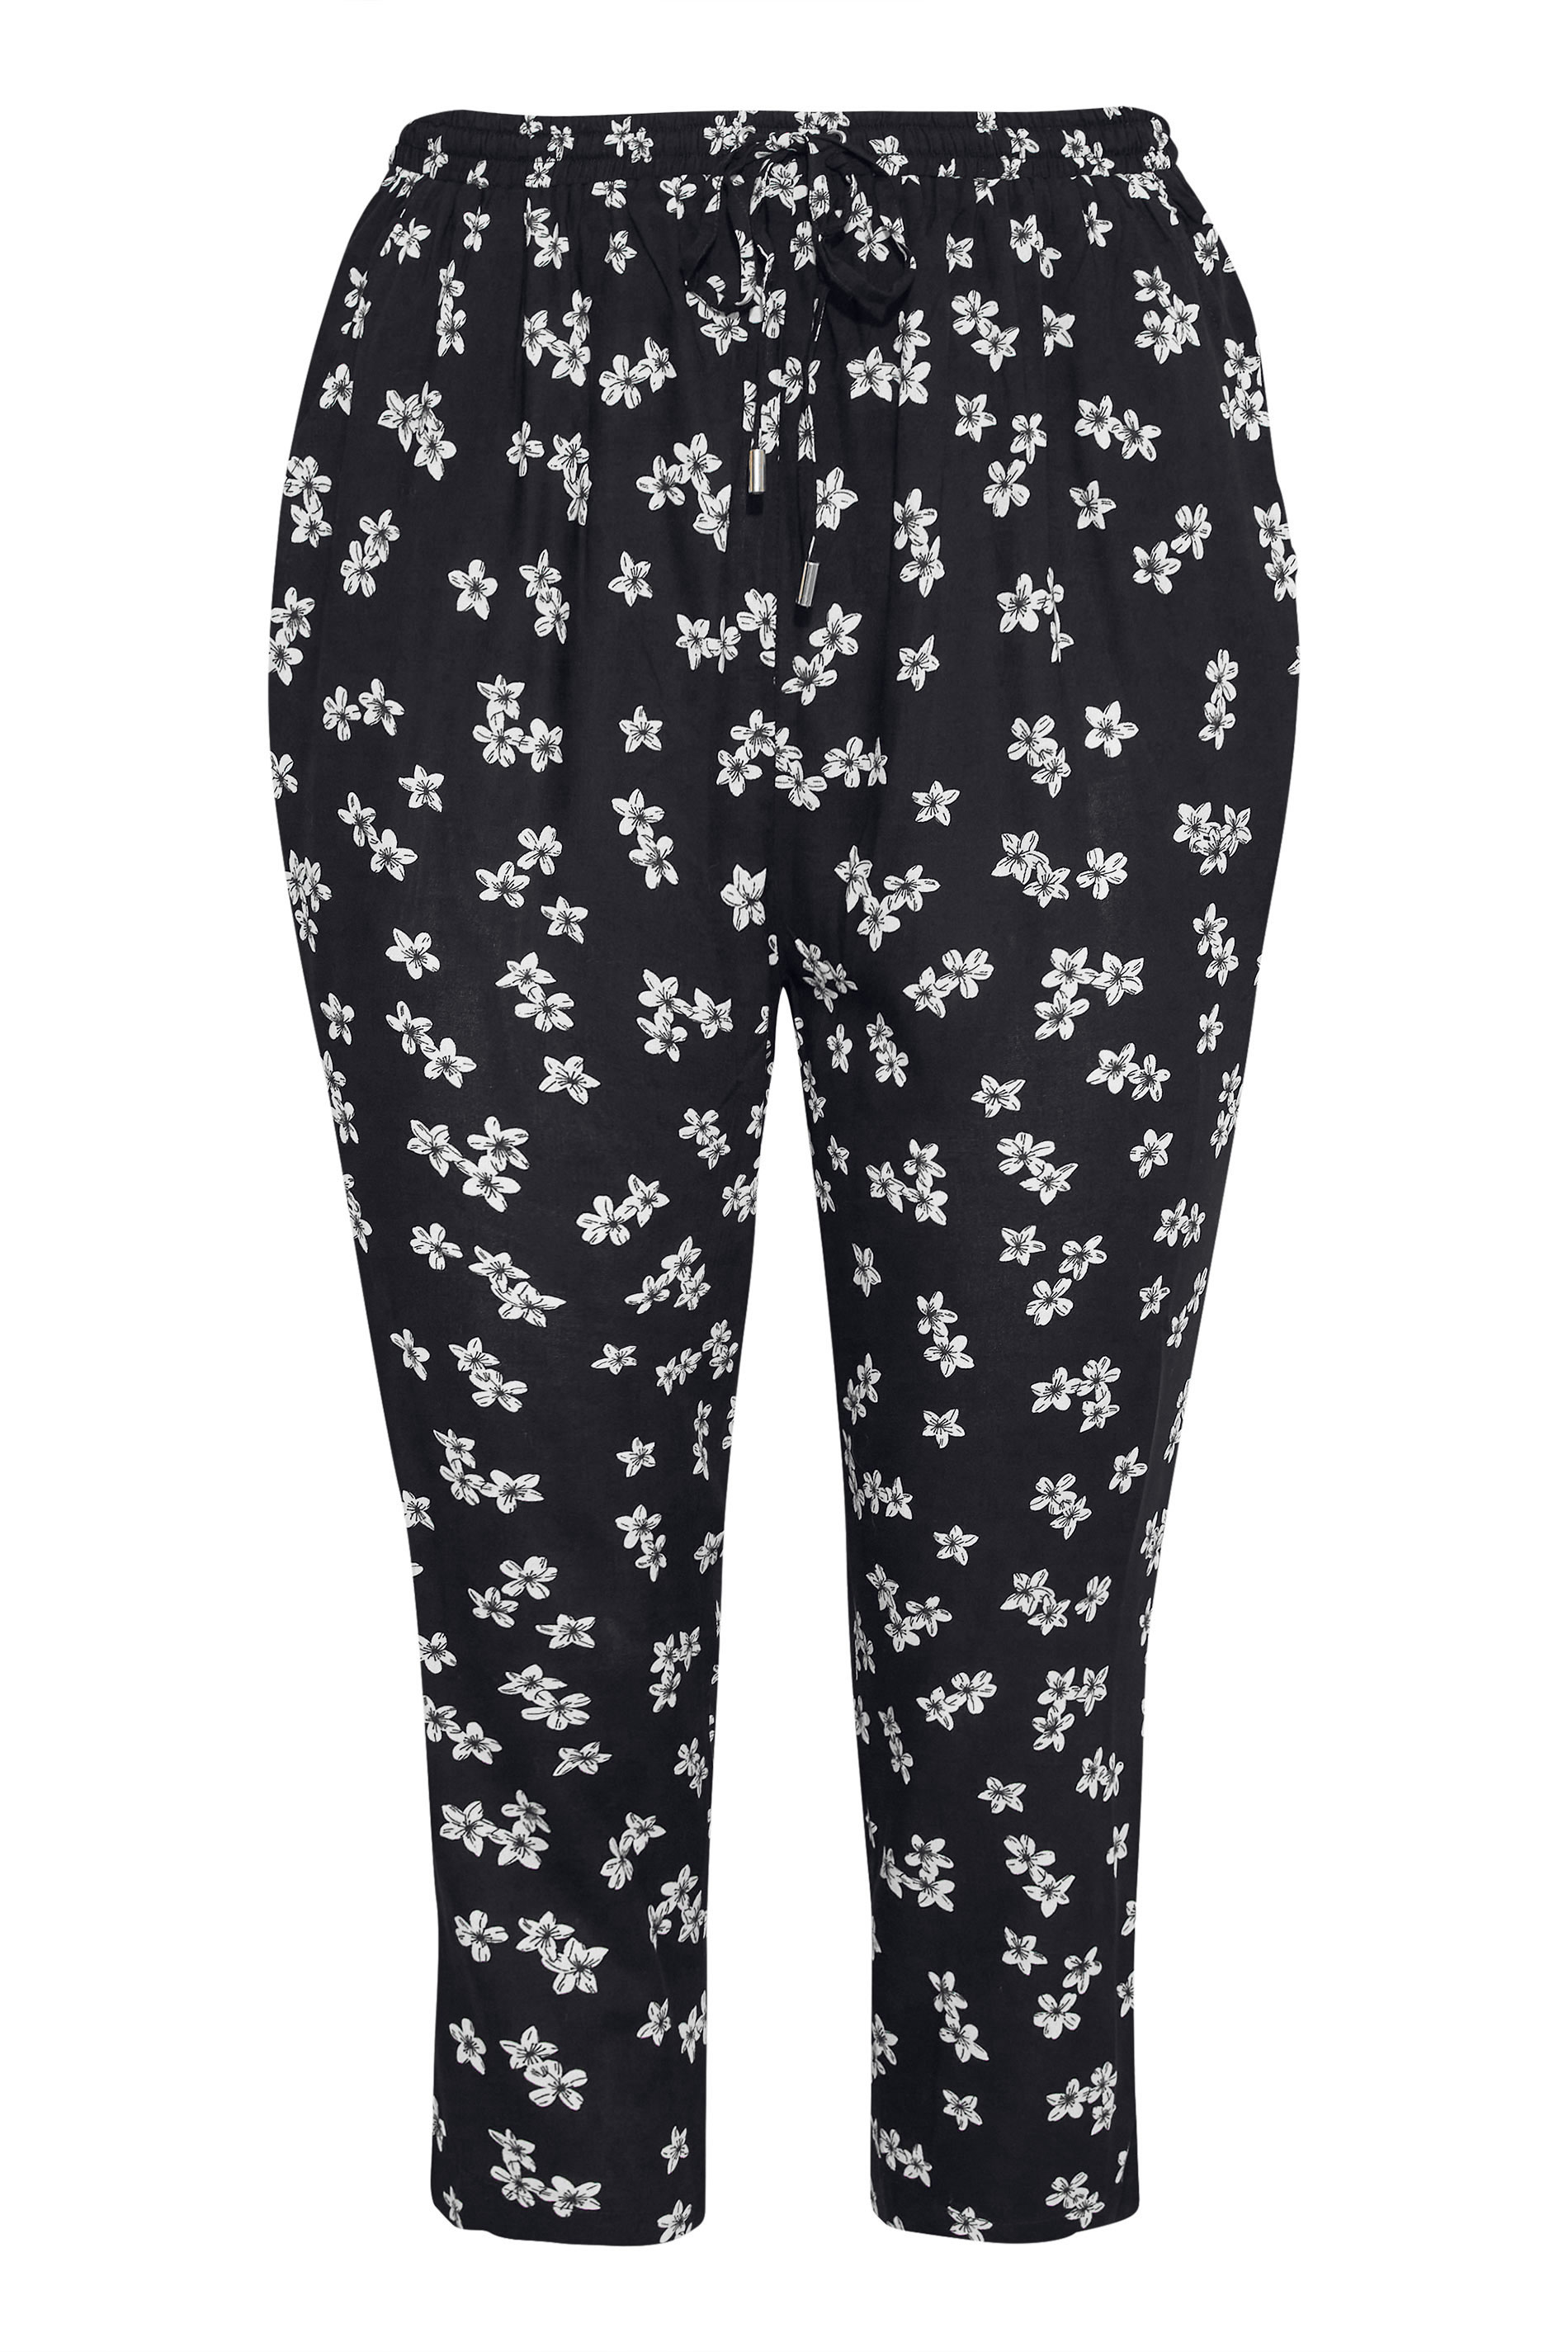 Grande taille  Pantalons Grande taille  Joggings | Jogging Noir Floral Léger Pantacourt - WE89700